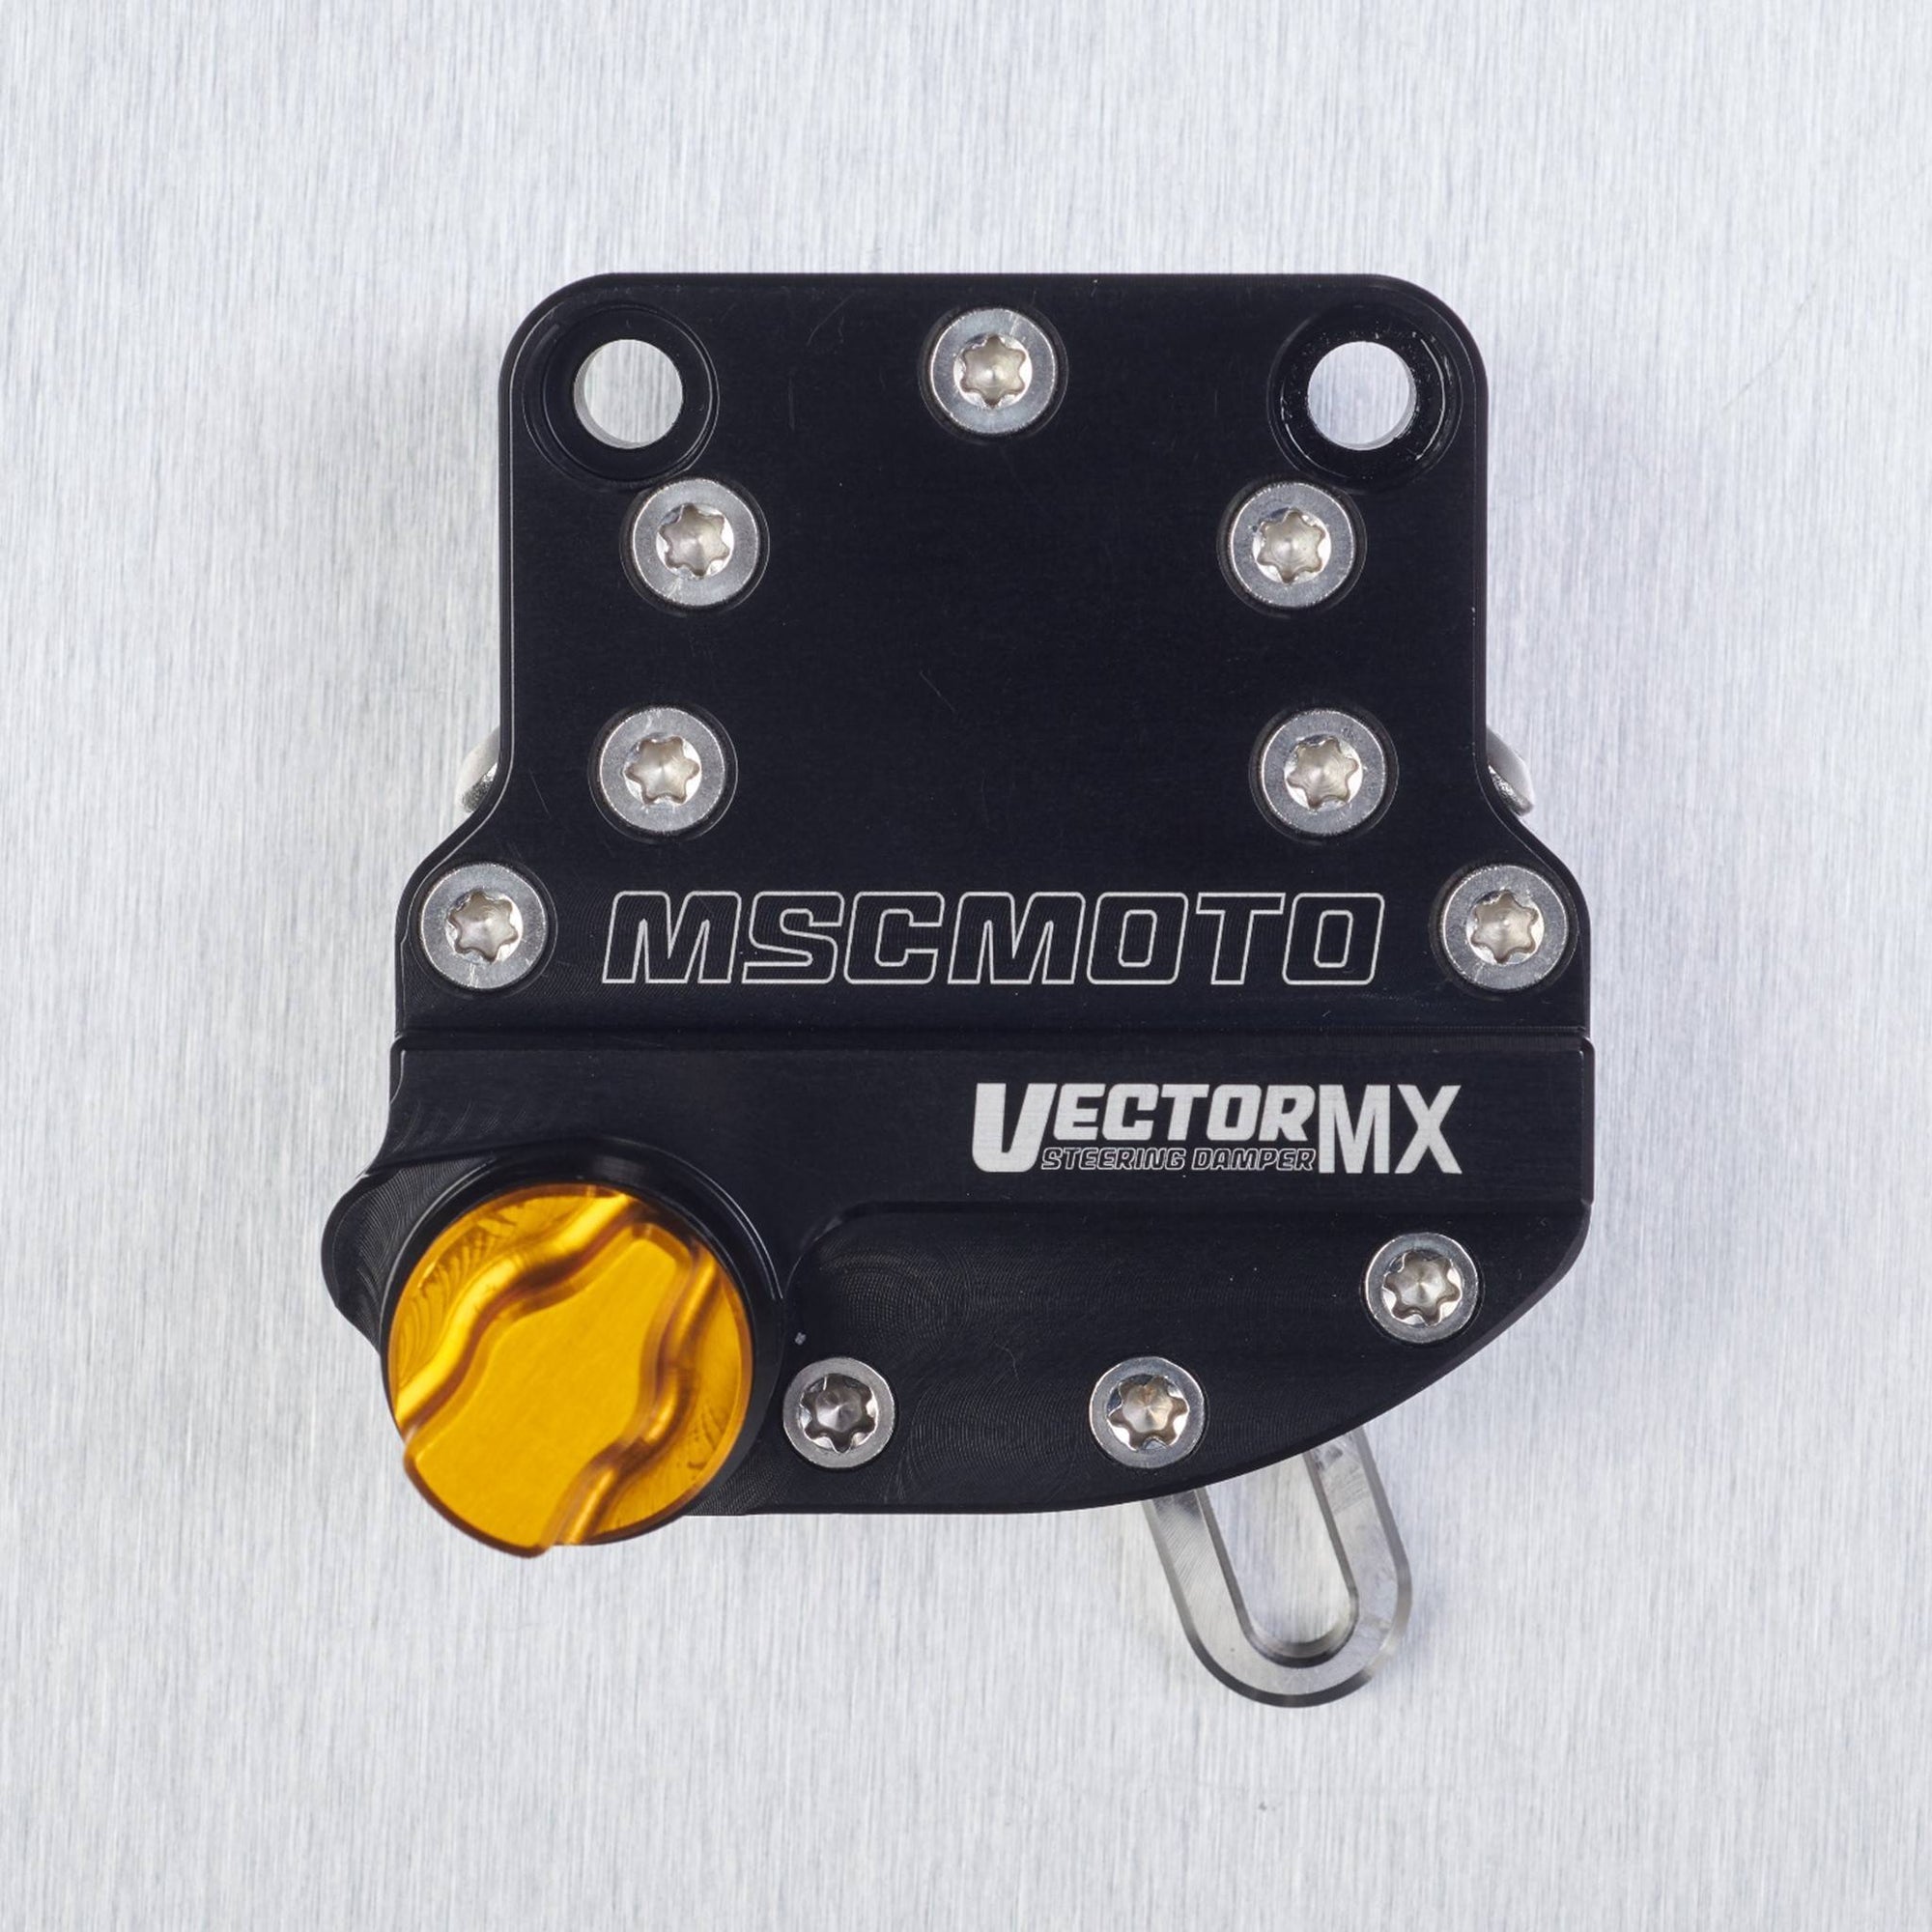 mscmotousa, VectorMX Steering Damper Kit "Down Under" Mount (VEC0015) - KTM 85 SX, HUSQVARNA TC 85, VEC0015, husqvarna, husqvarna-2014-tc-85-esi5591079, ktm, vectormx, , Imported and distributed in North & South America by Lindeco Genuine Powersports.